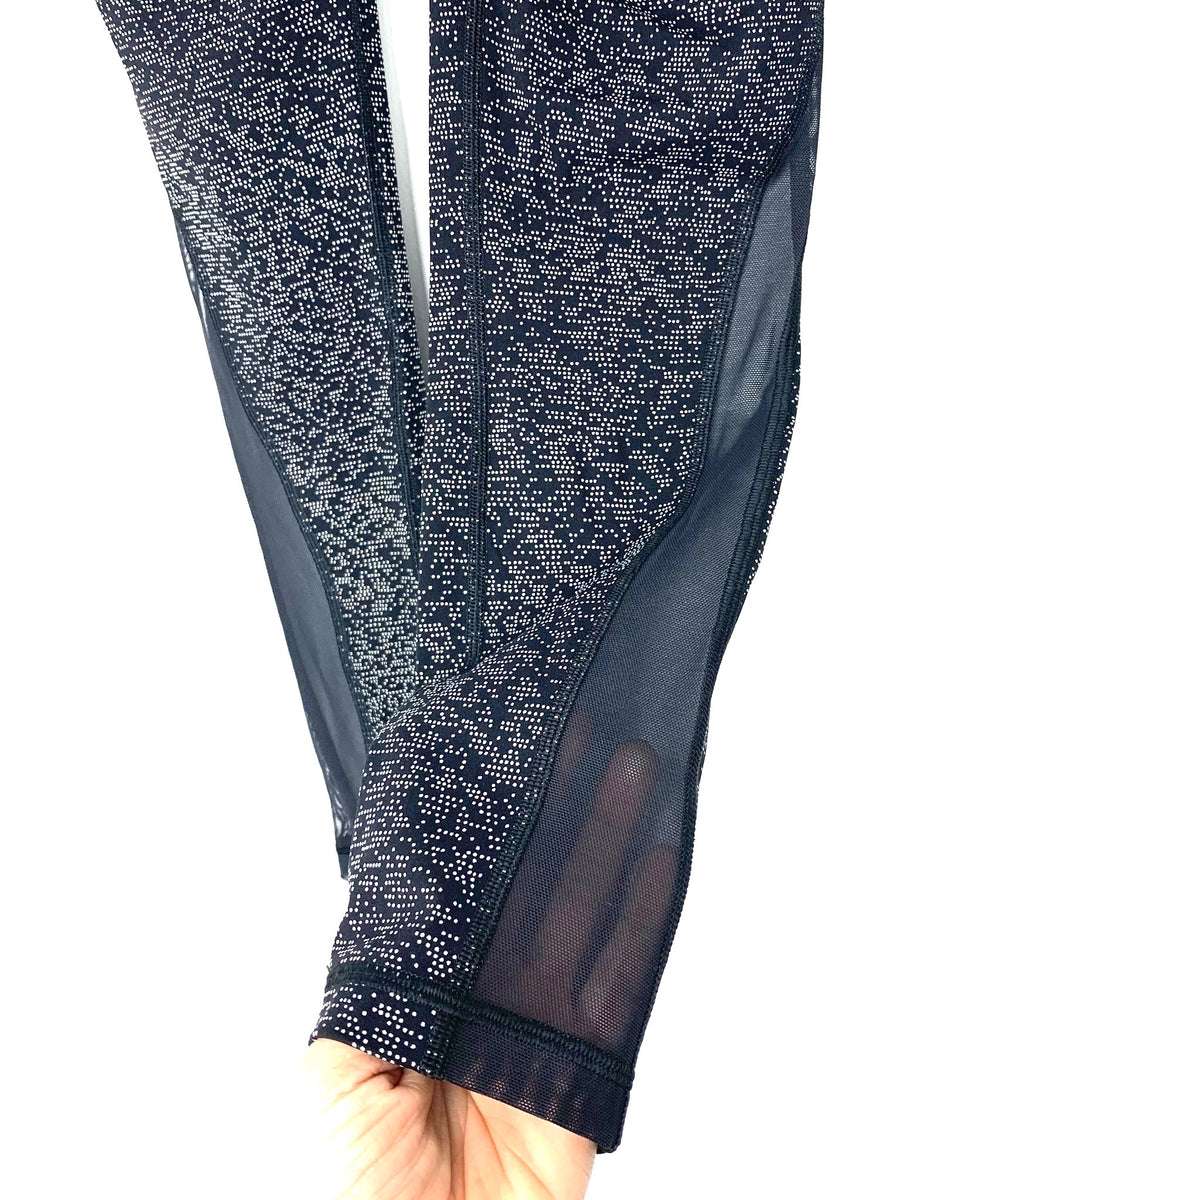 Lululemon Black & White speckled tights with mesh side pockets size 4